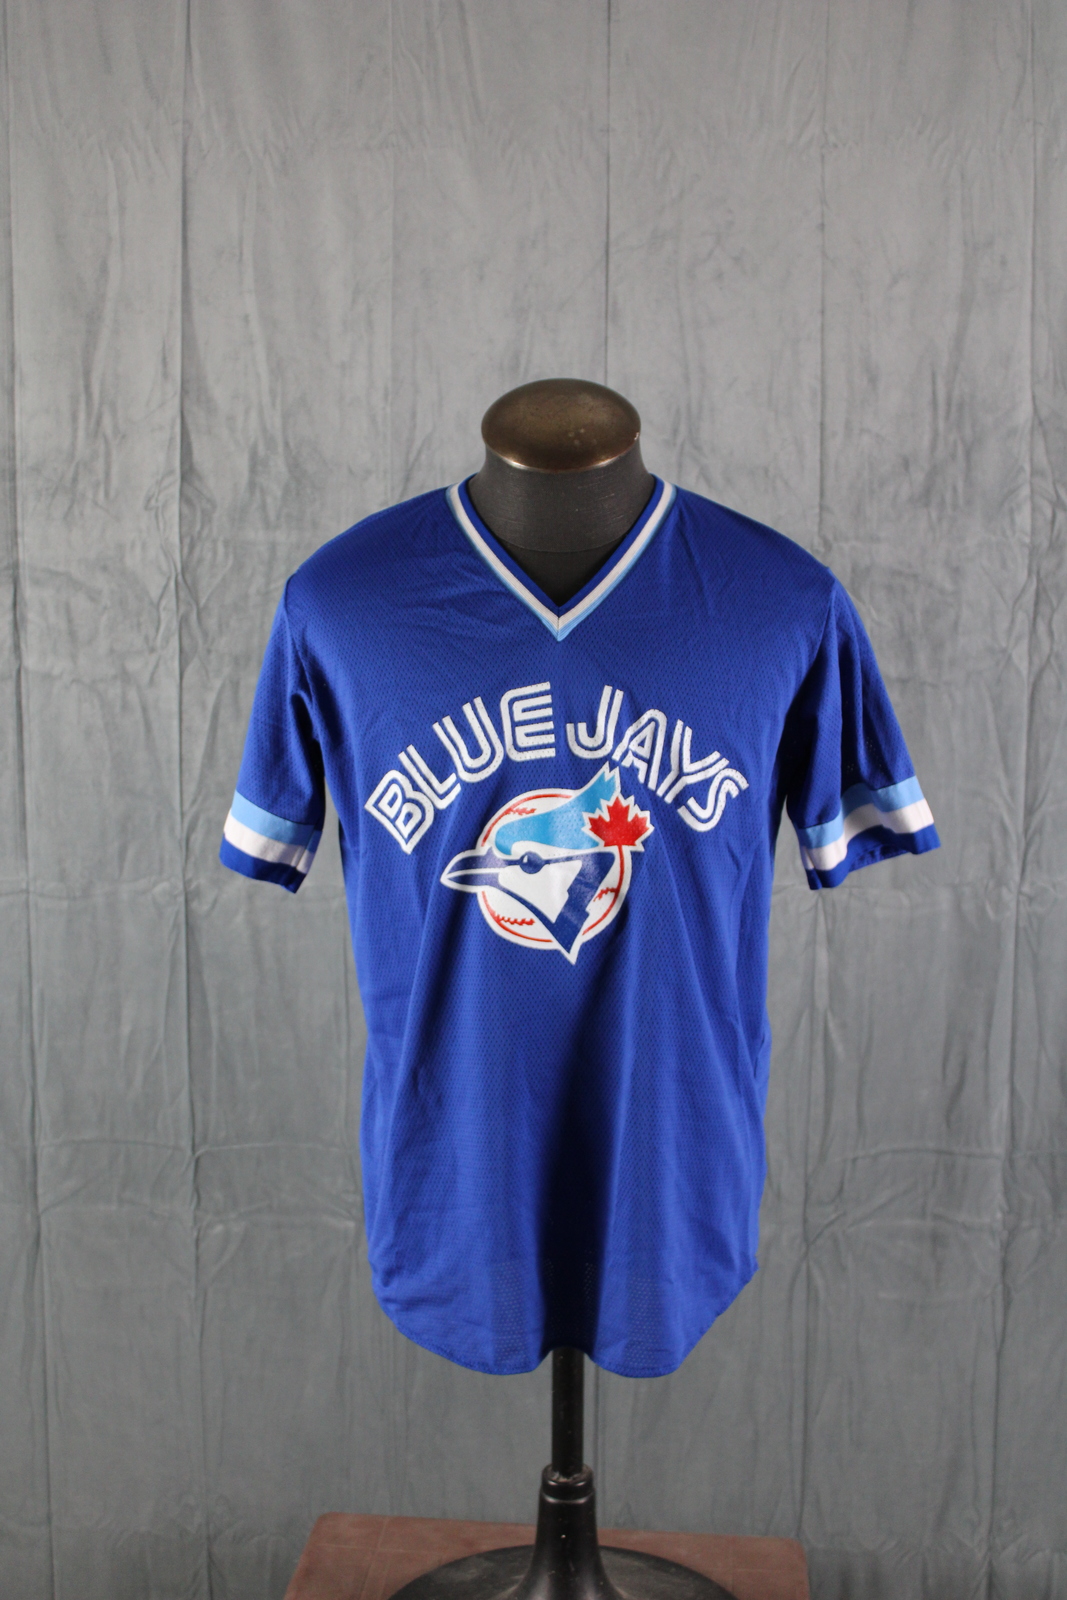 Toronto Blue Jays Jersey (VTG) - Batting Shirt by Ravens Knit - Men's XL - $75.00